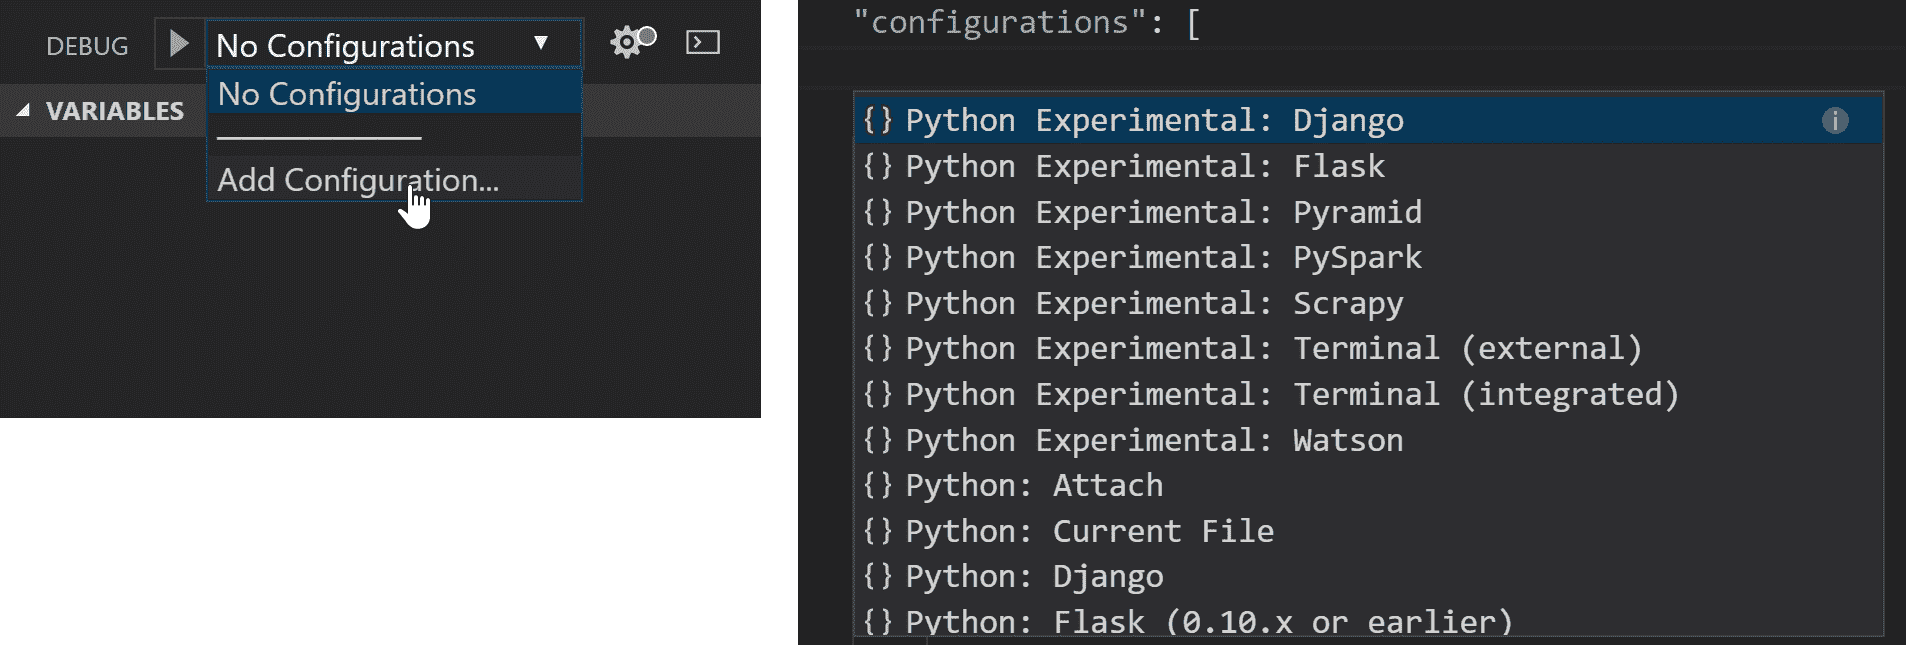 August 2018 release of Visual Studio Code version 1.27 1_ExperimentalDebugConfigs.png